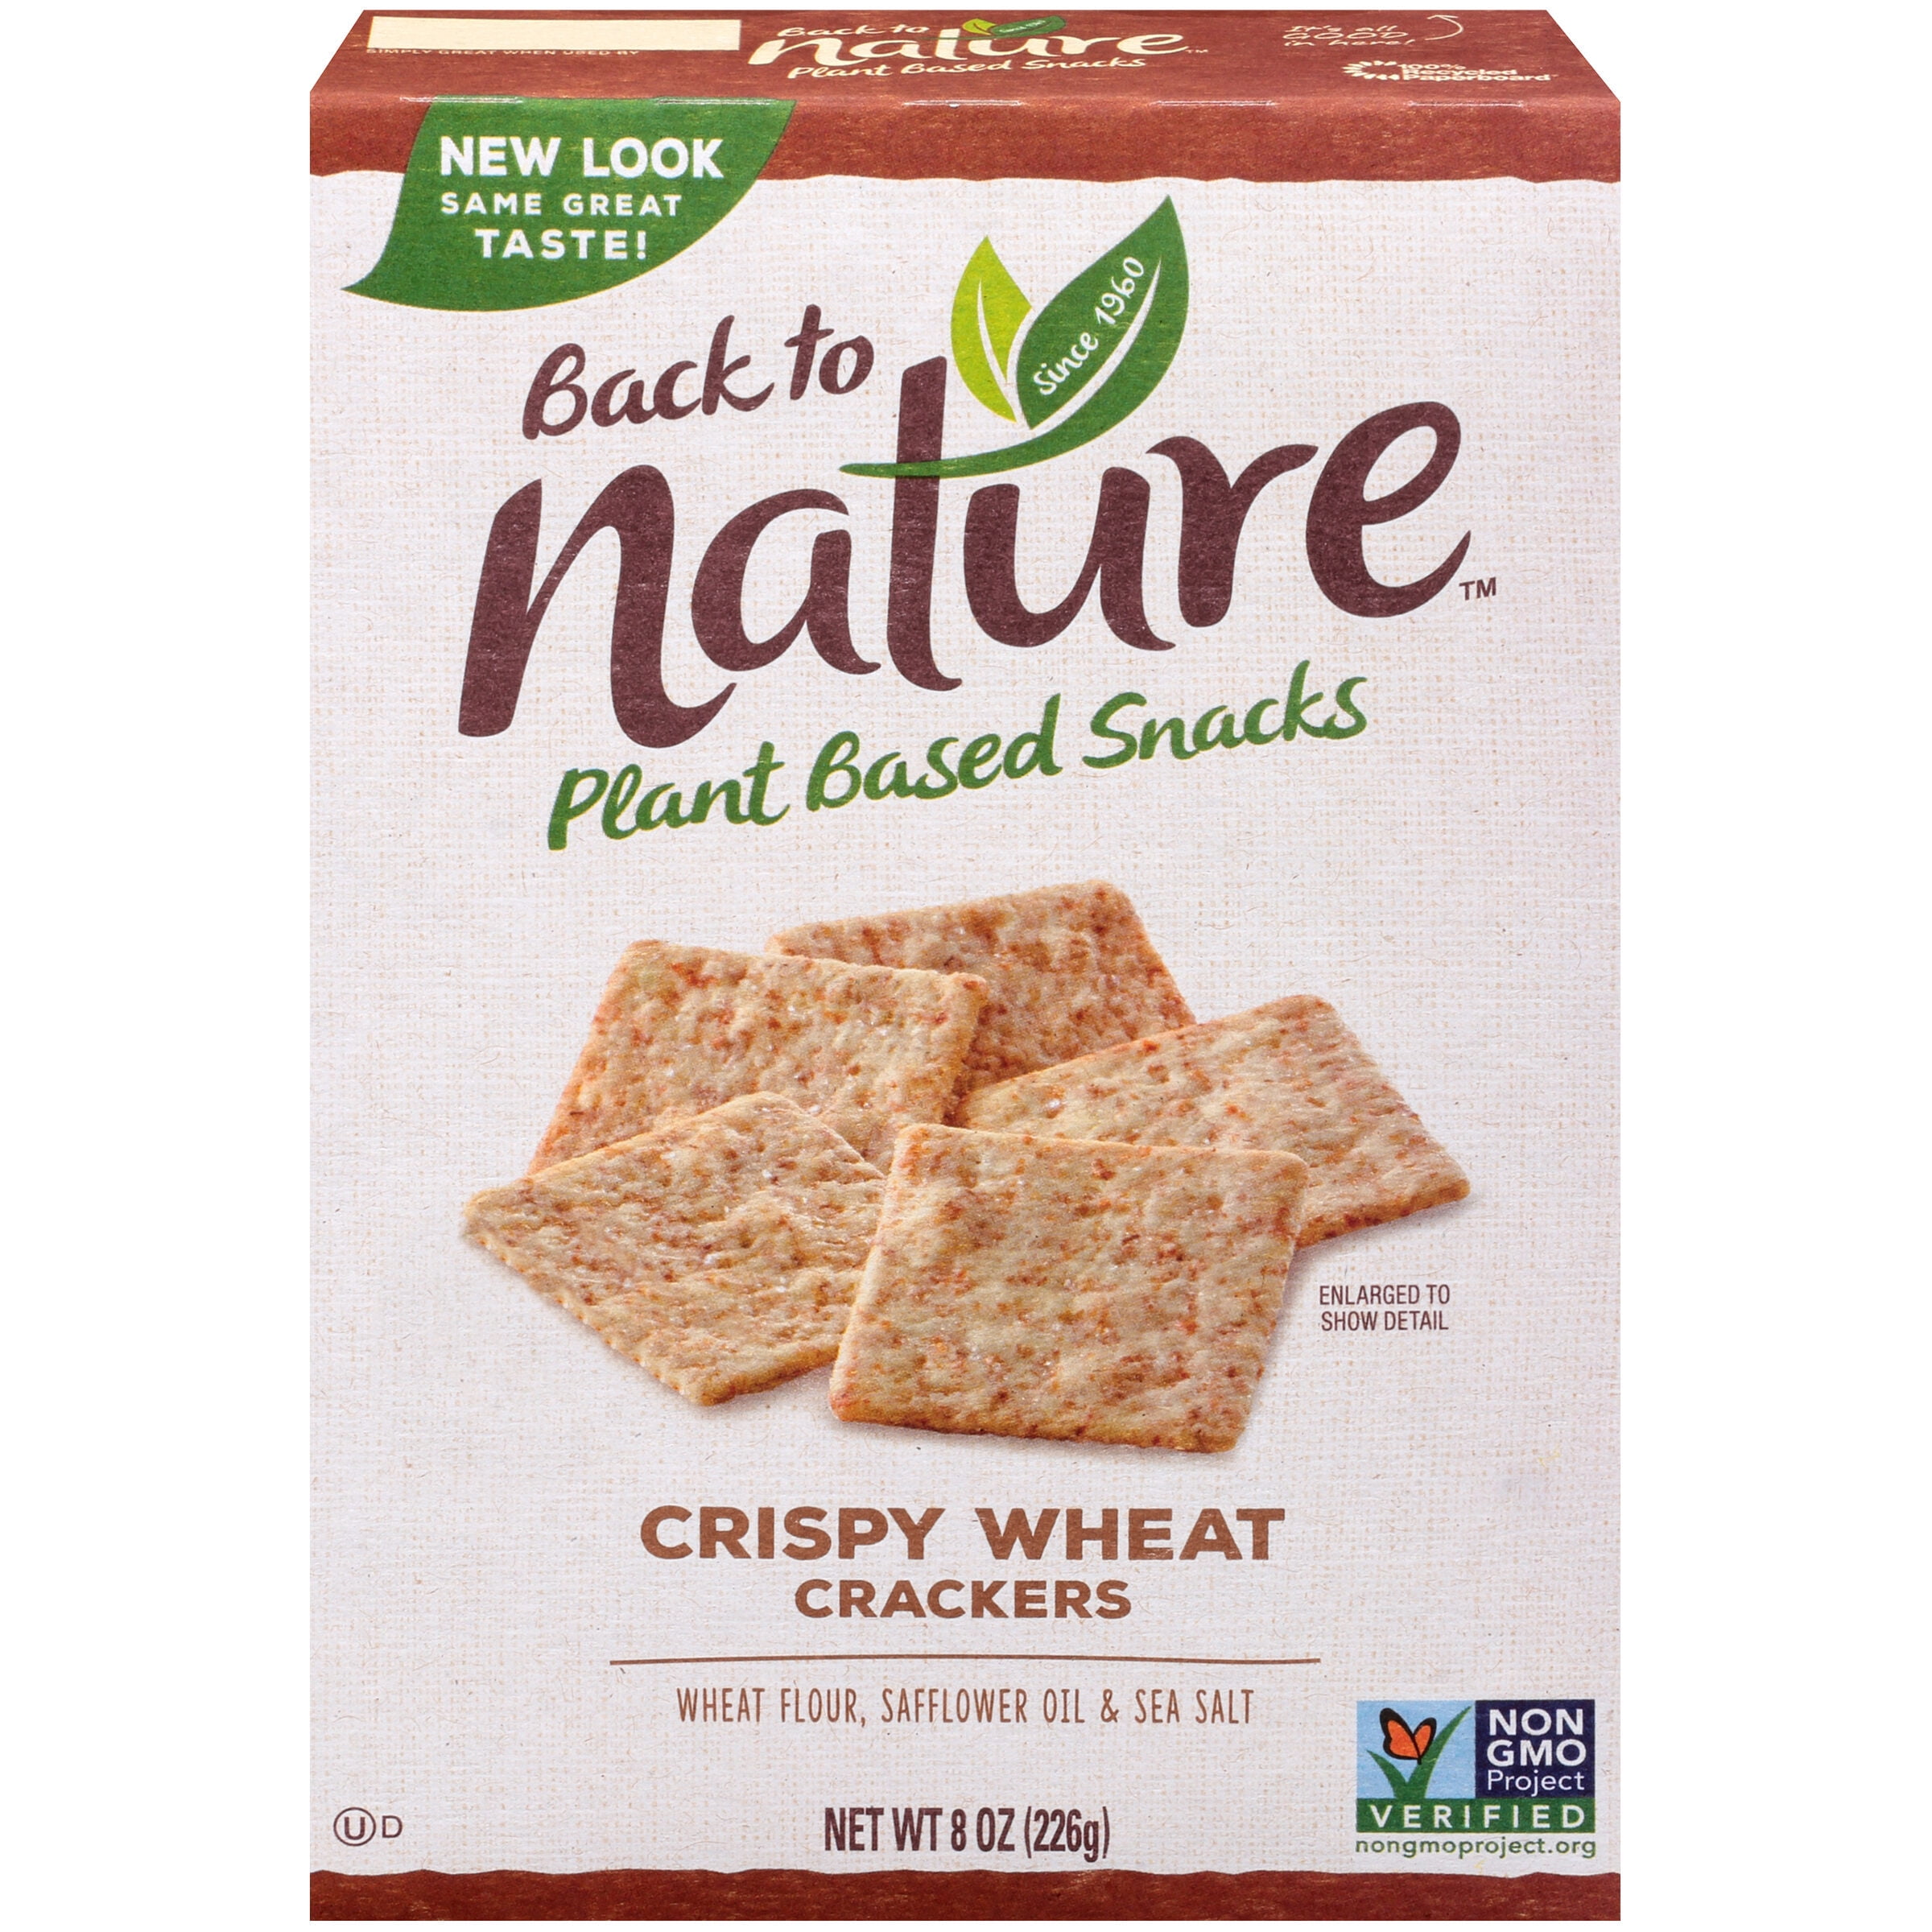 Photo 1 of Back to Nature Plant Based Snacks Crispy Wheat Crackers 8 oz. Box
exp oct 11 2021